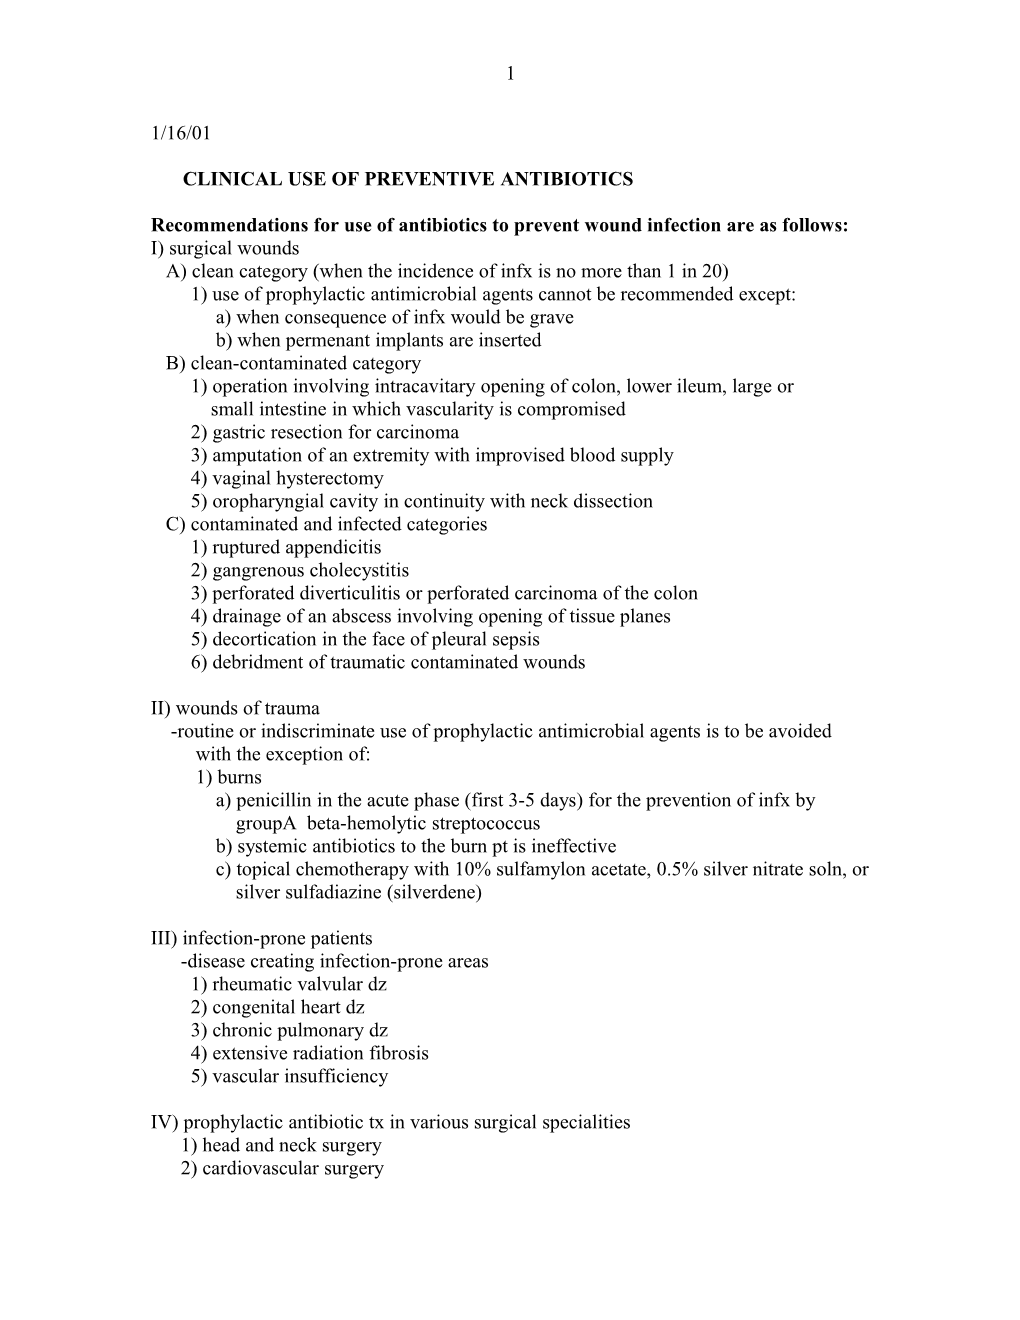 Clinical Use of Preventive Antibiotics